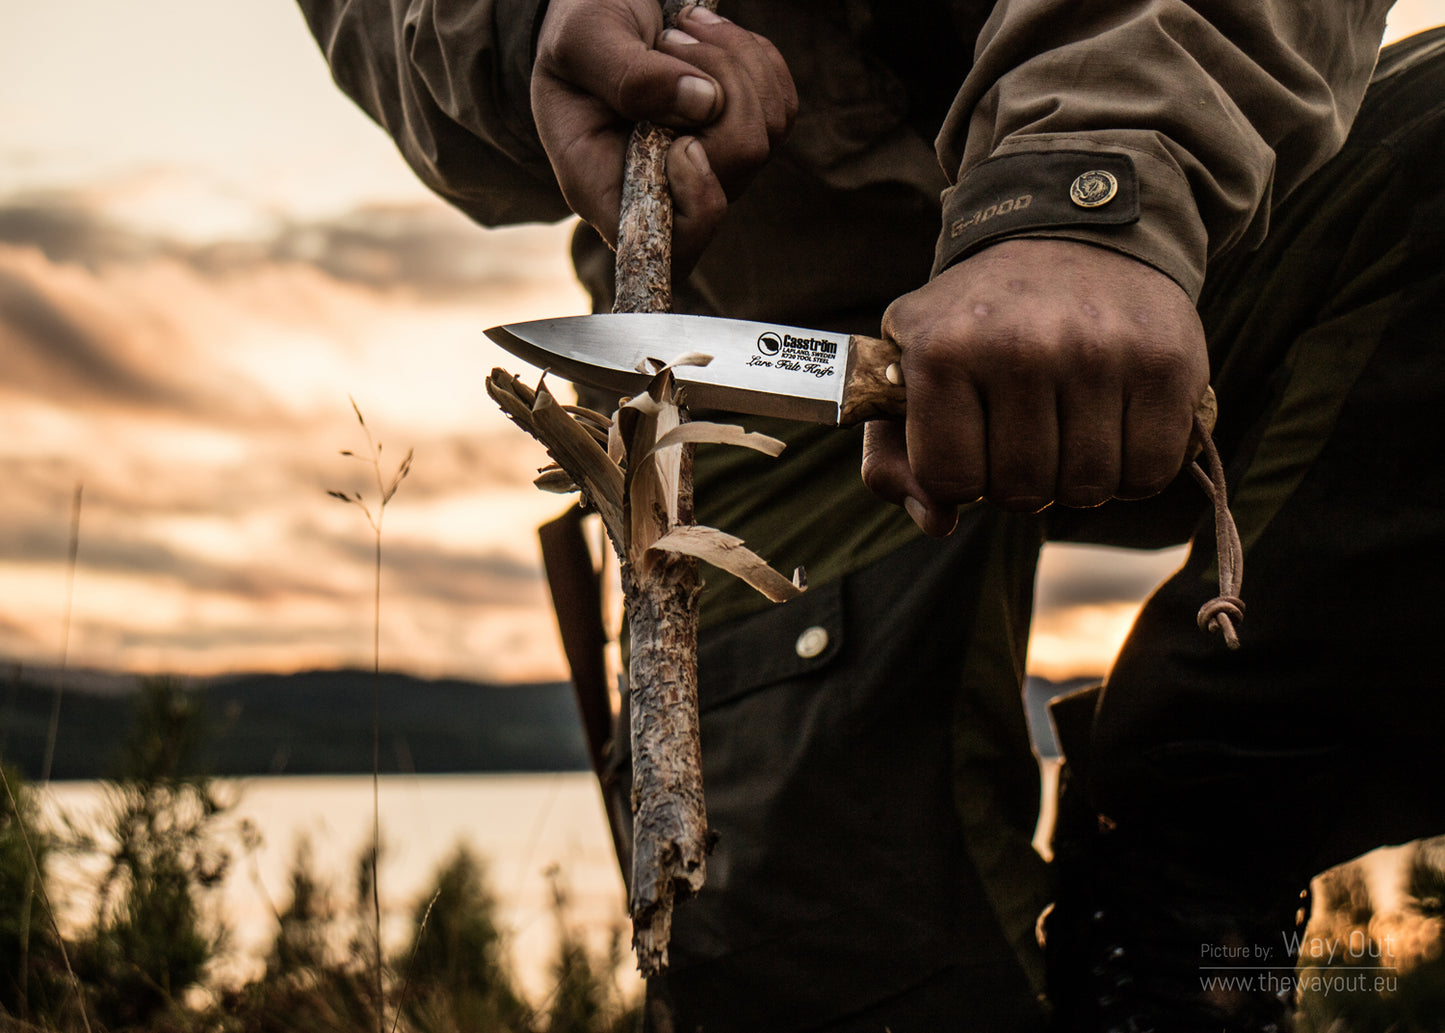 Carving wood using the Casström Lars Fält knife